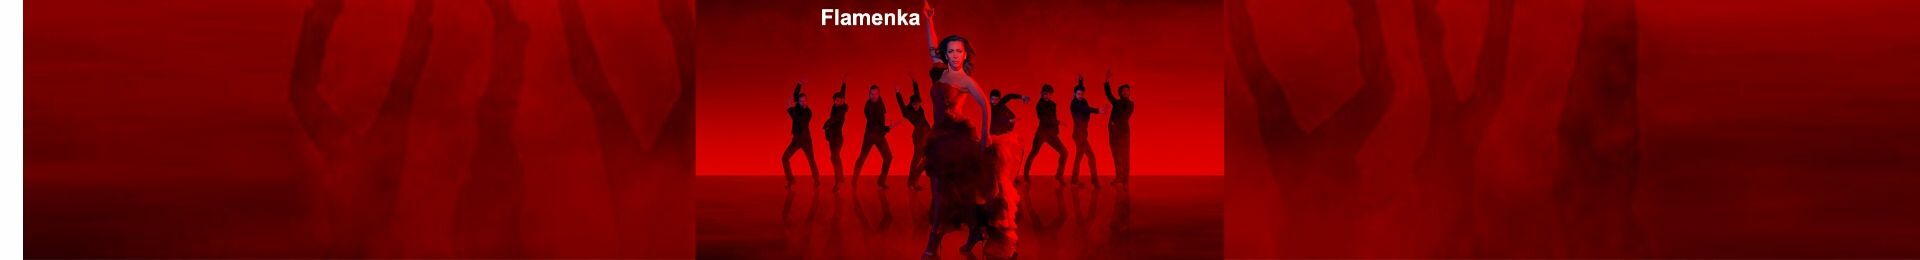 Flamenka banner image